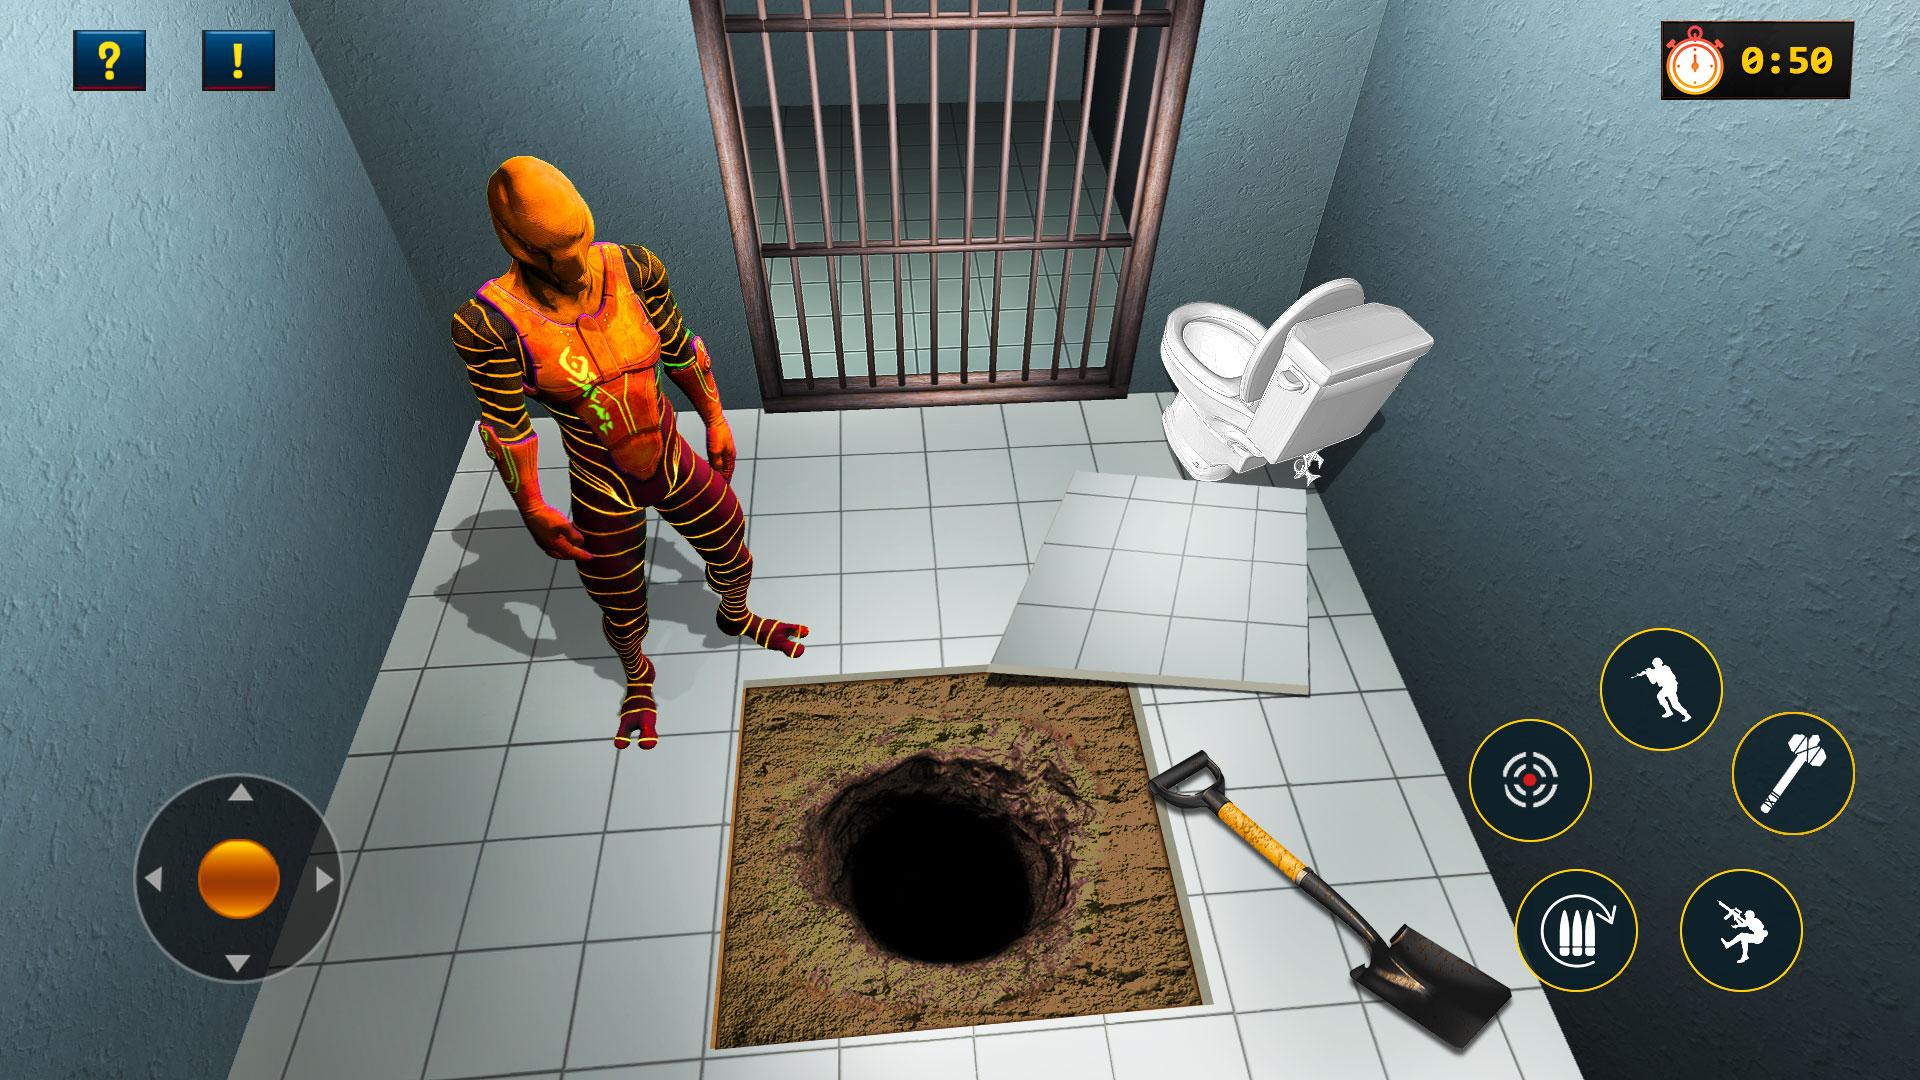 Prison Escape- Jail Break Grand Mission Game 2021 for Android - Download